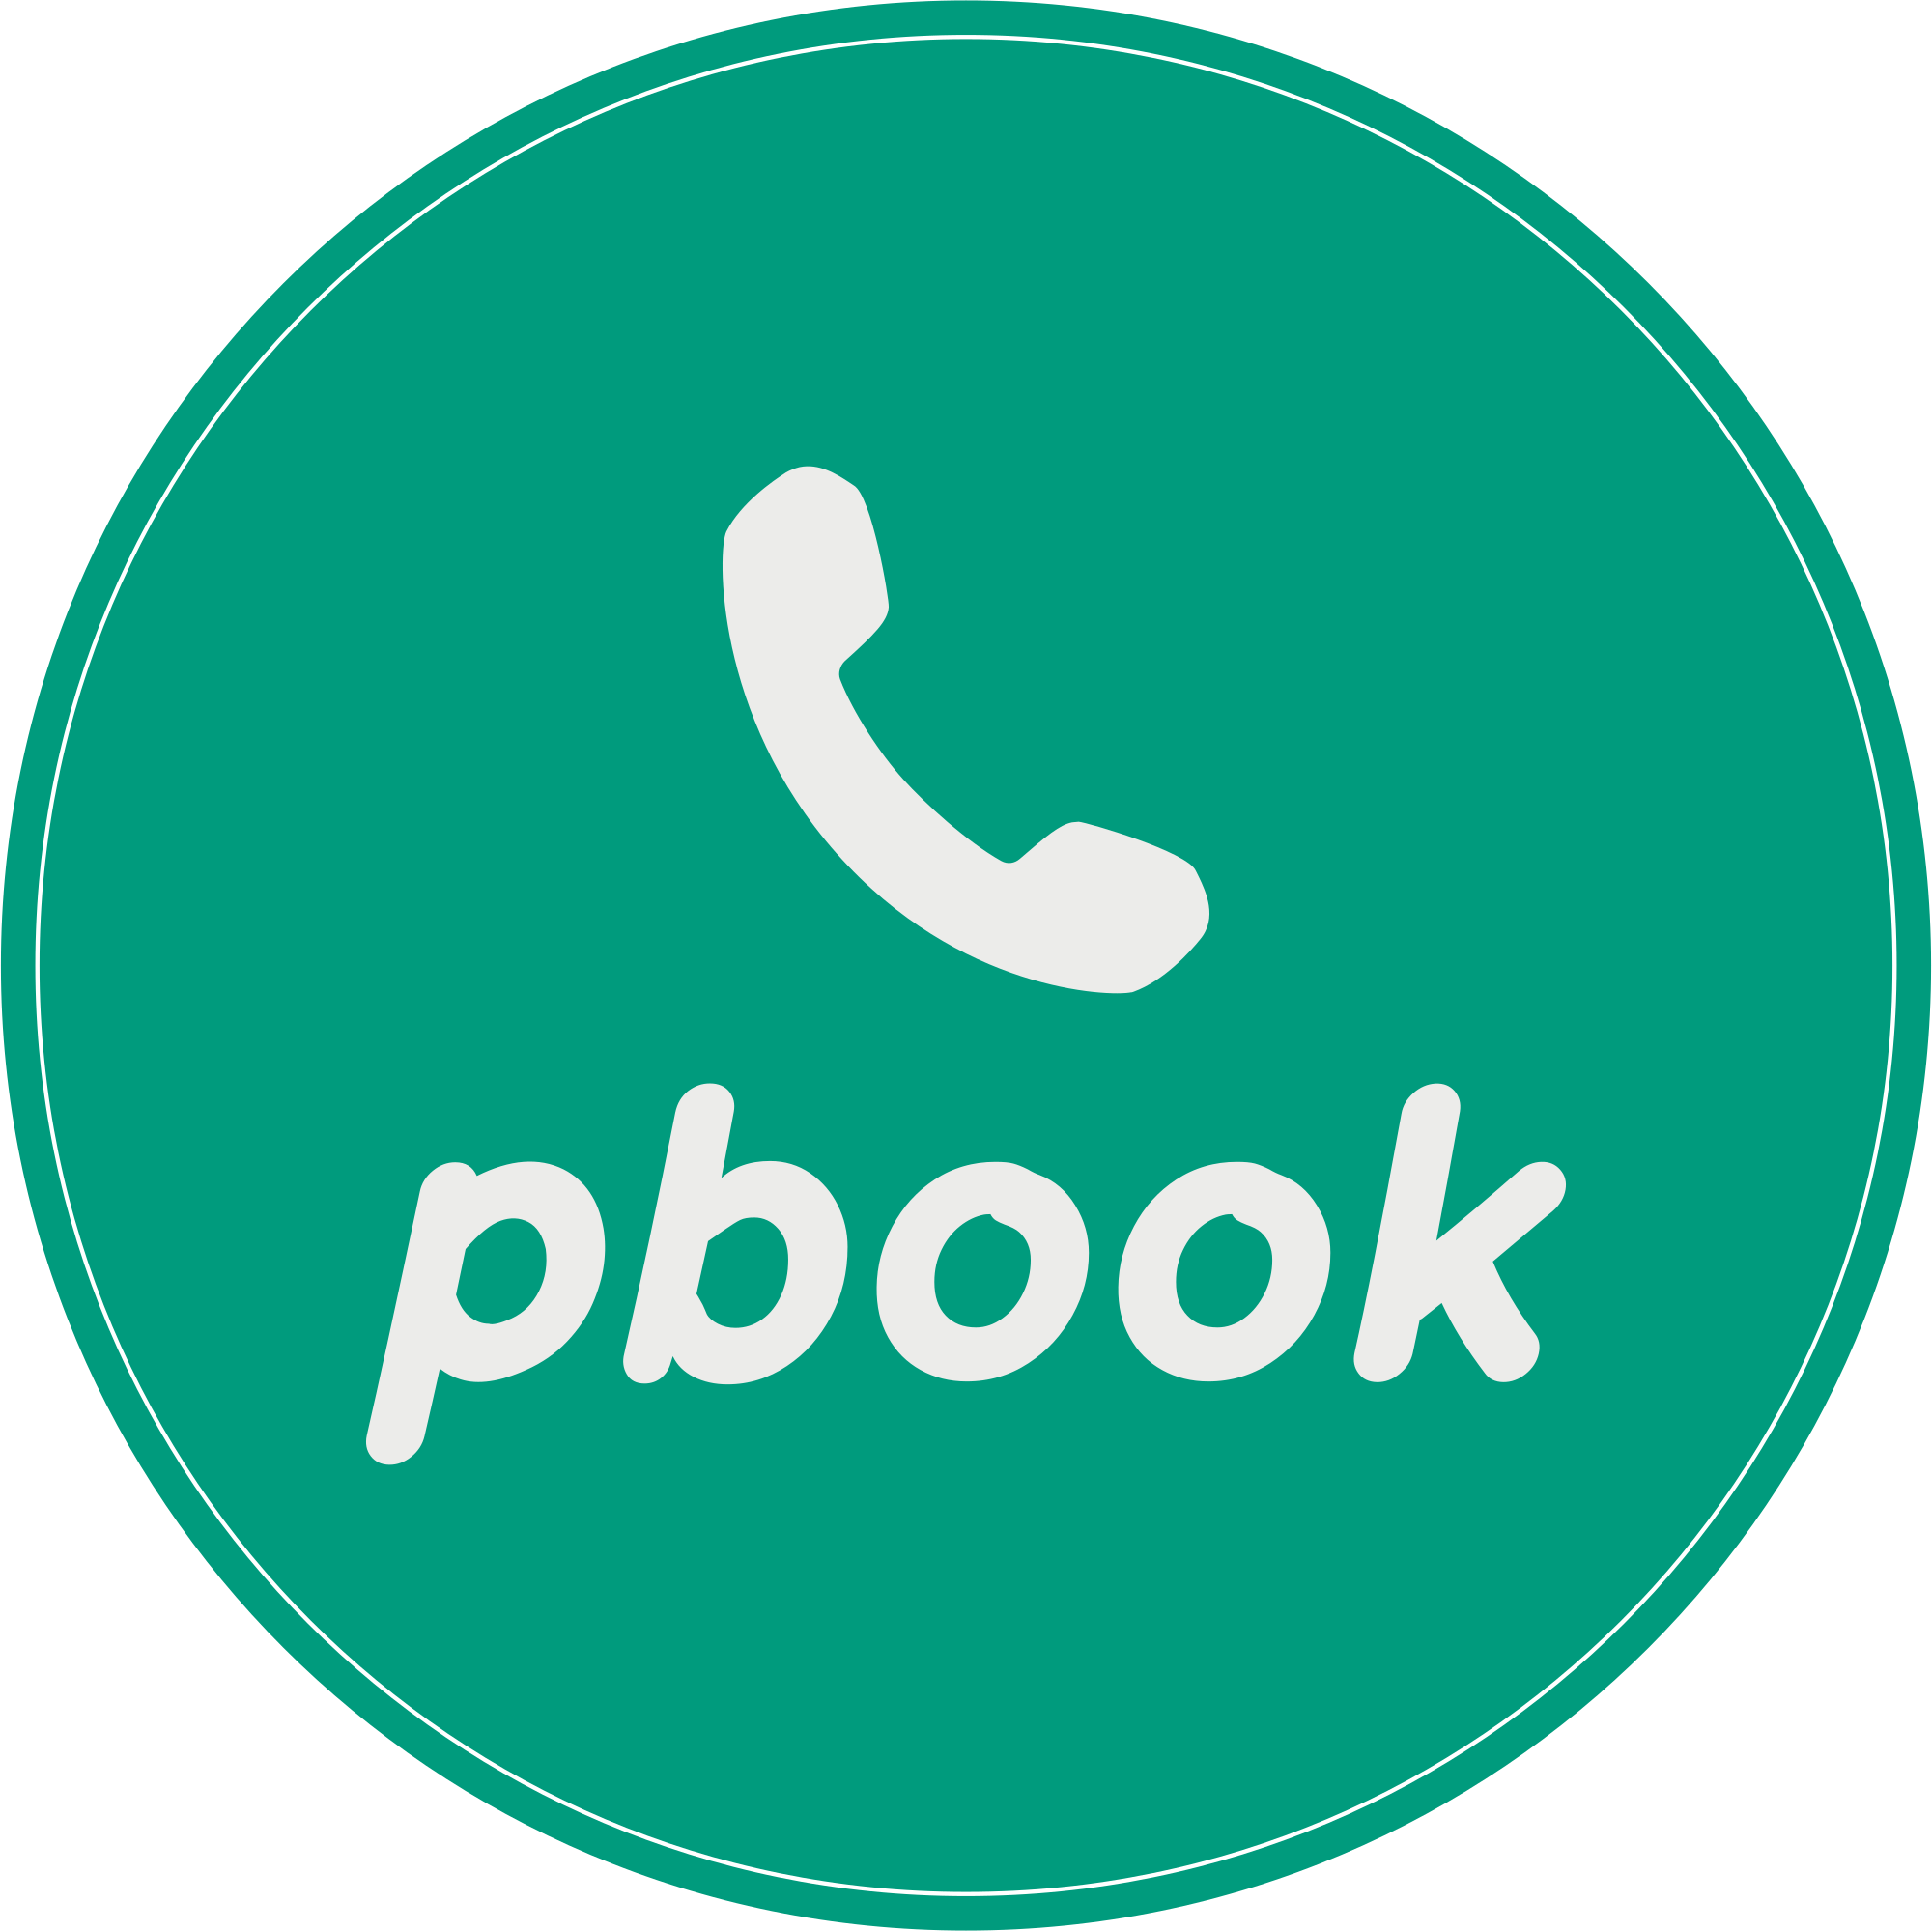 pbook logo